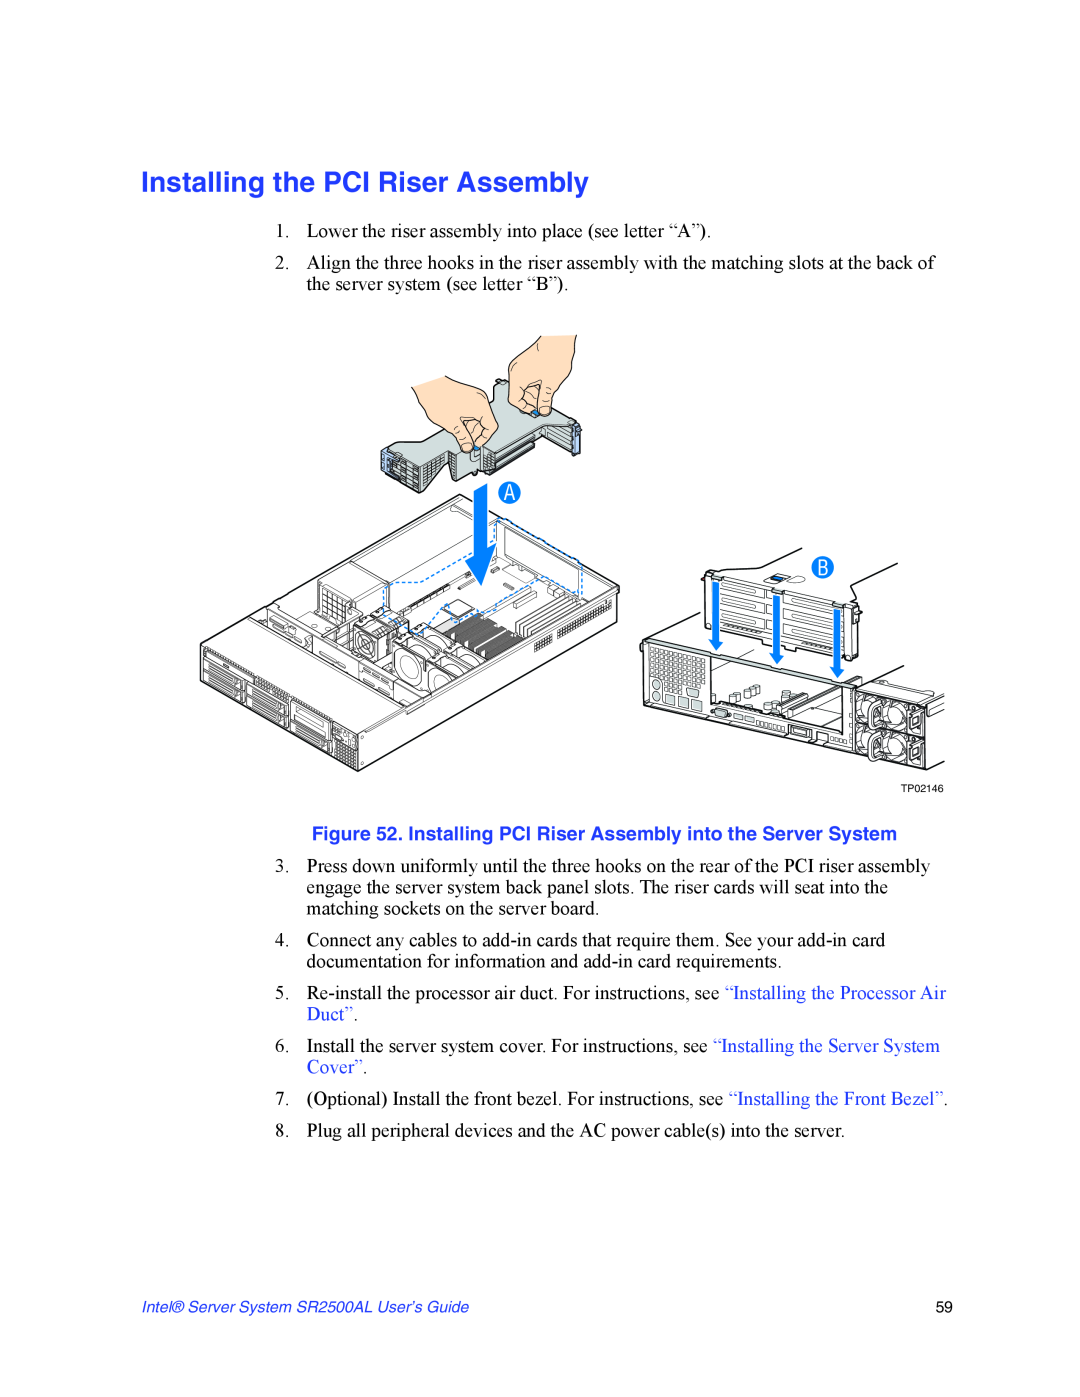 Intel SR2500AL manual Installing the PCI Riser Assembly, Installing PCI Riser Assembly into the Server System 